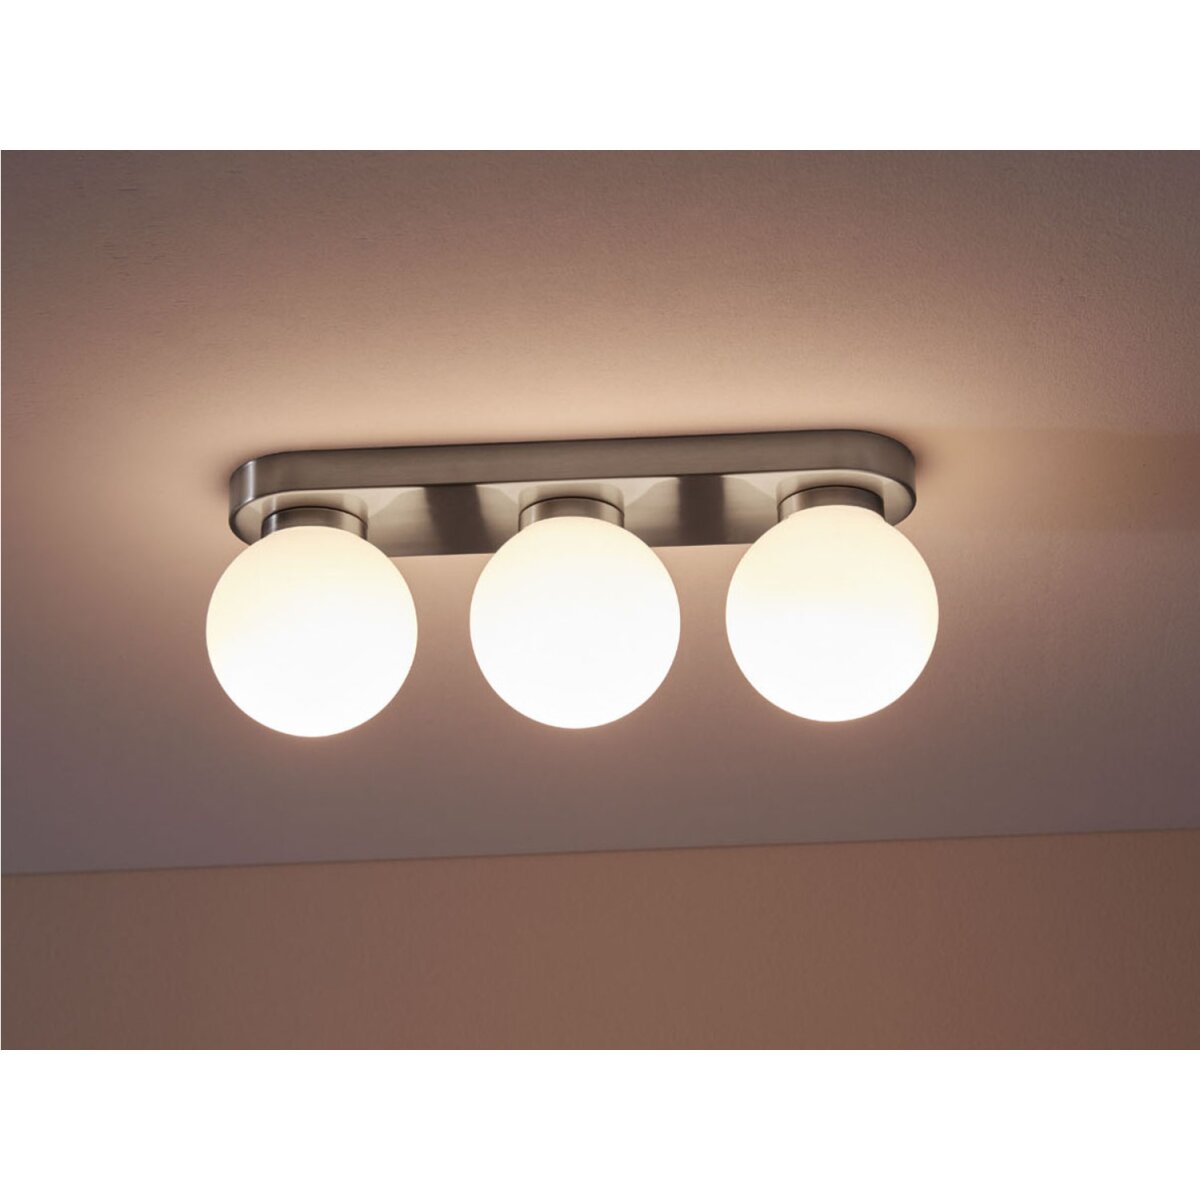 LIVARNO home LED-Deckenleuchte, 3 LEDs, 4,9 W - B-Ware, 22,99 €